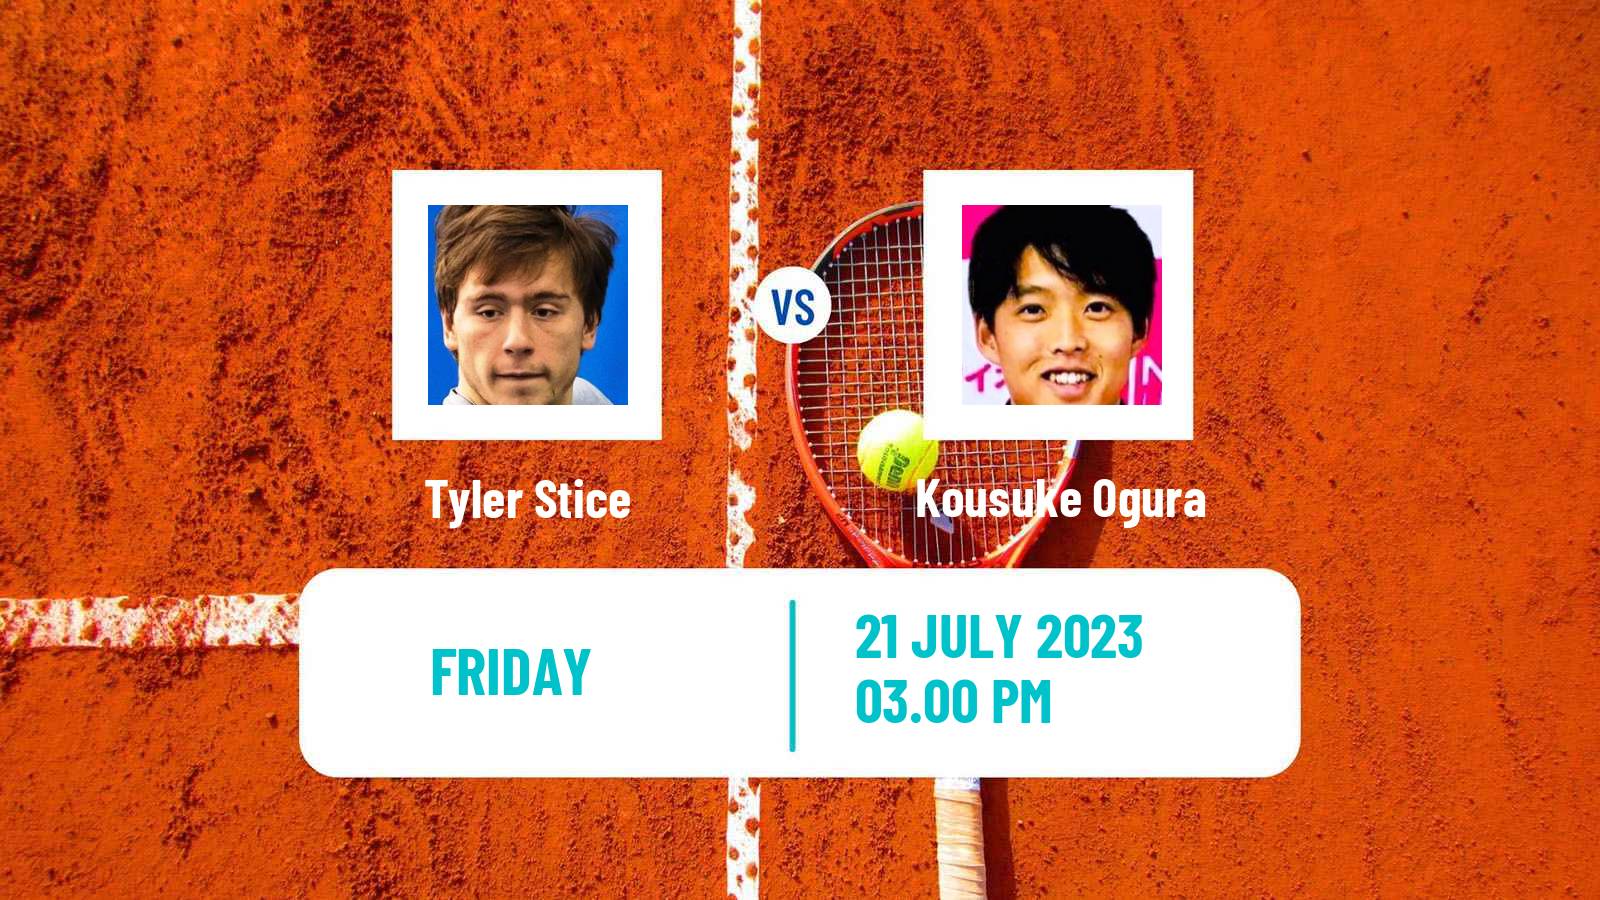 Tennis ITF M15 Rochester Ny Men Tyler Stice - Kousuke Ogura